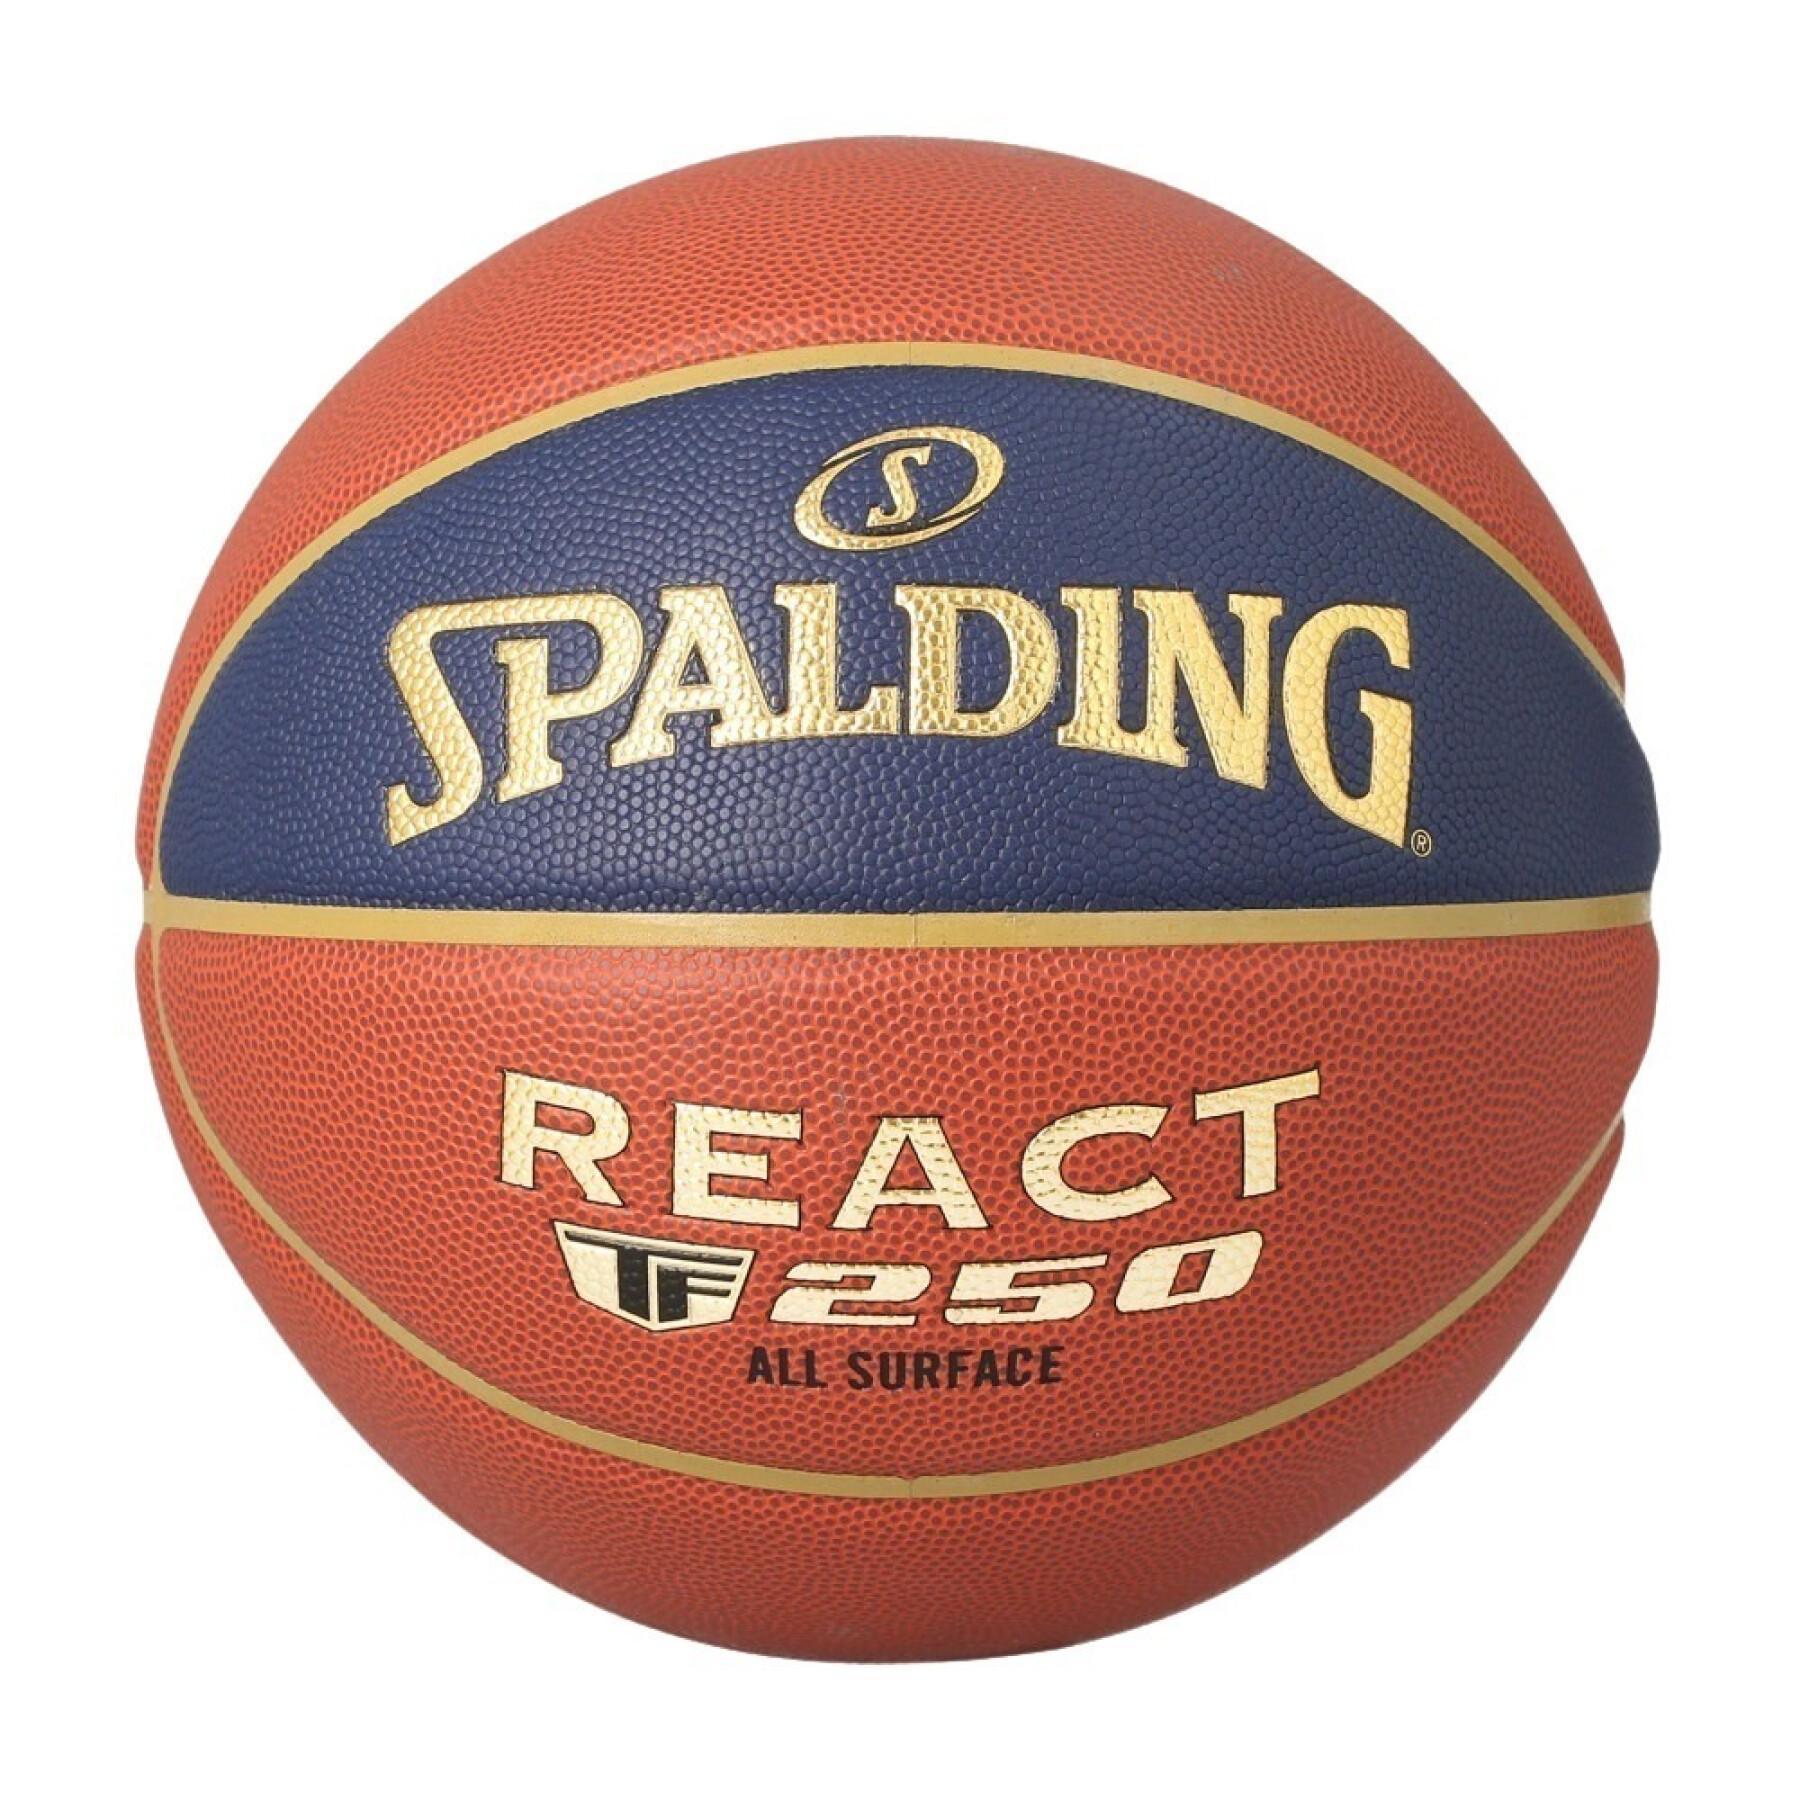 Ball Spalding LNB React TF 250